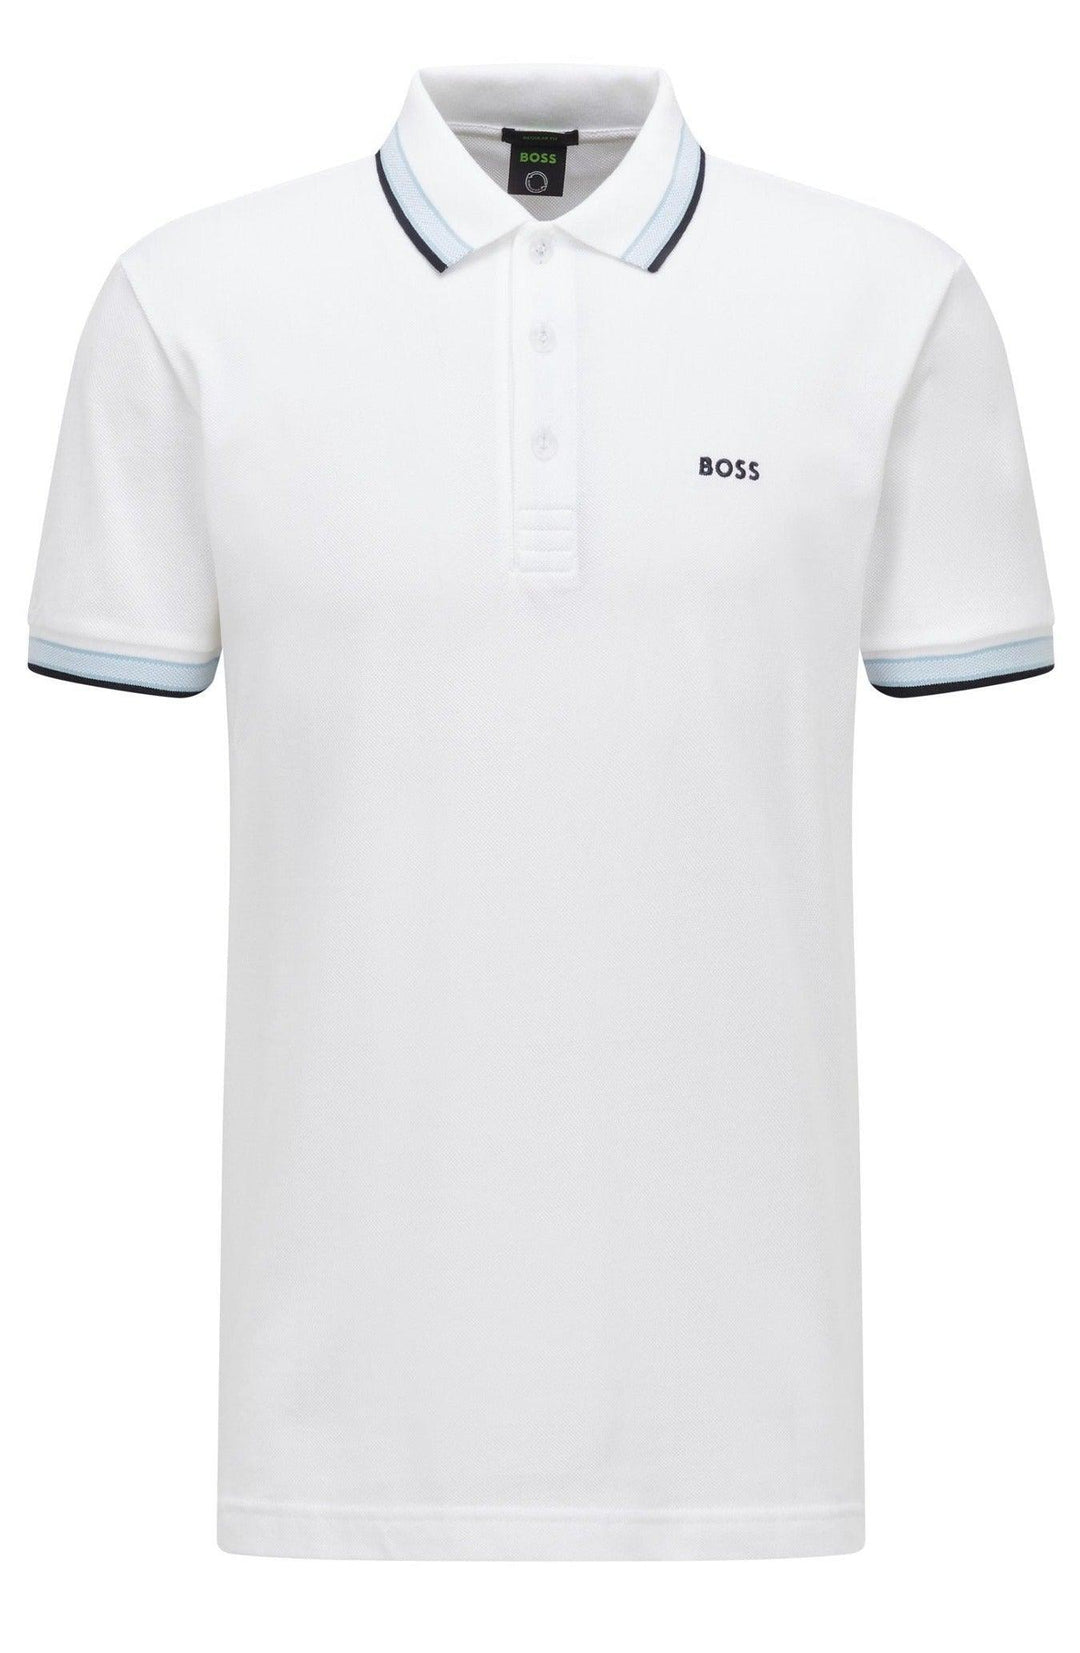 Hugo Boss Paddy Polo Shirt White - Urban Menswear